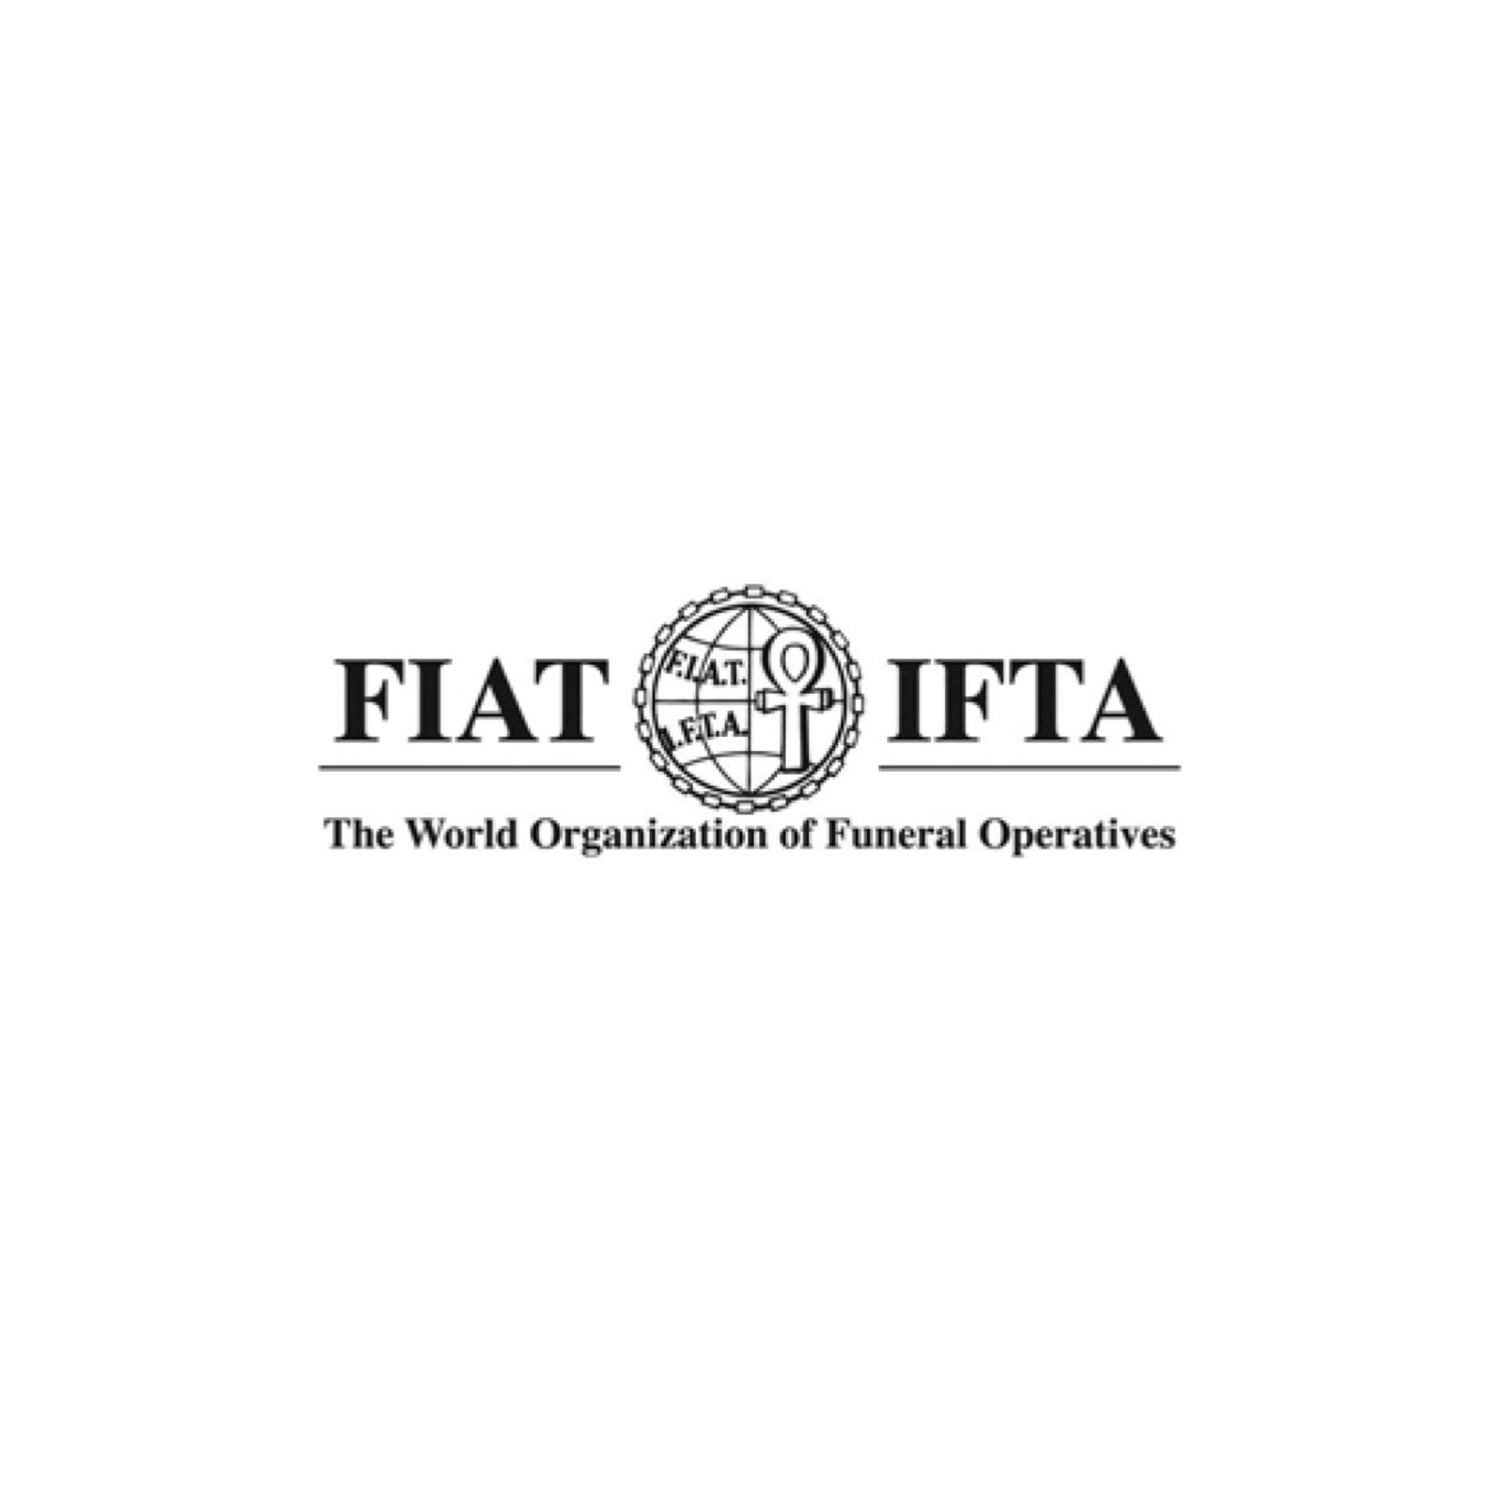 FIAT IFTA The World Organization of Funeral Operatives